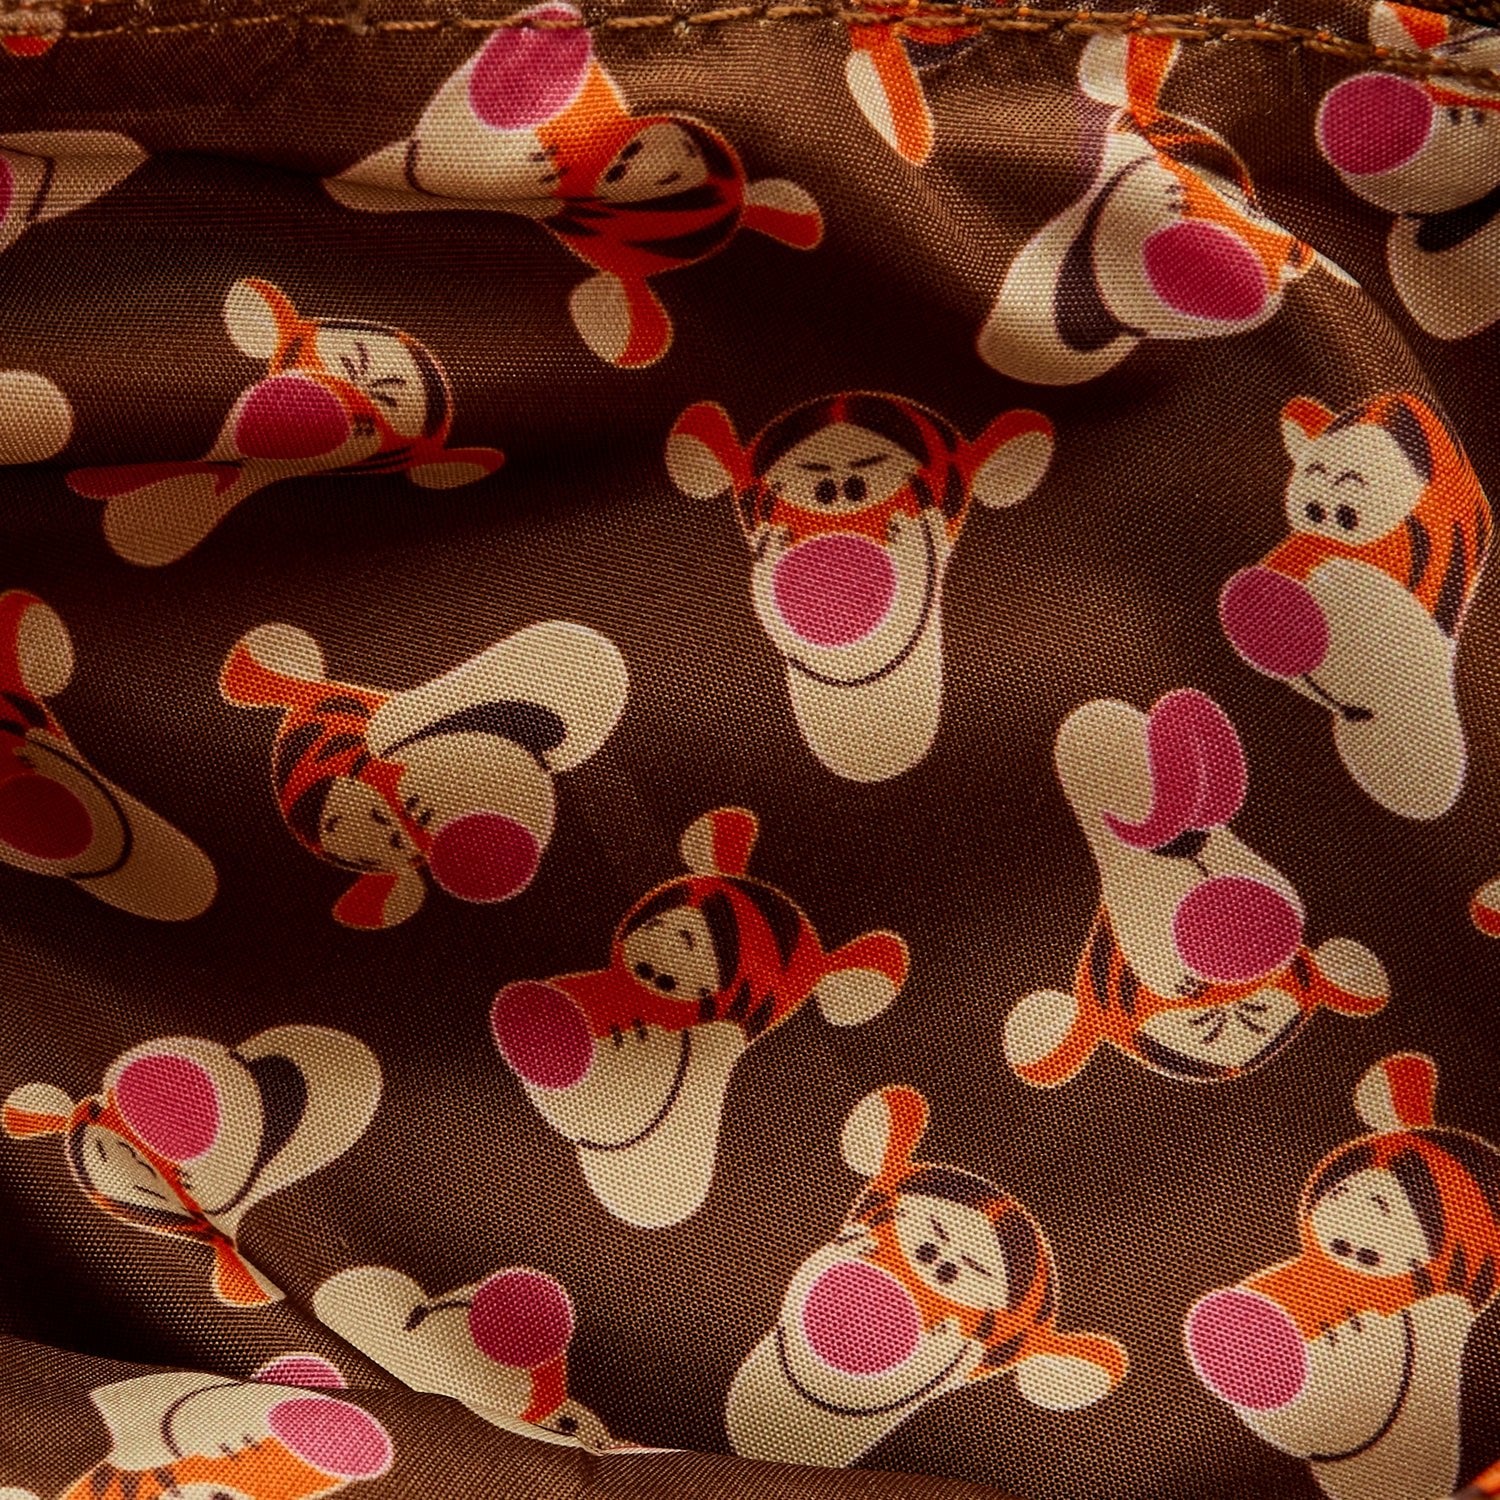 Loungefly x Disney Winnie the Pooh Tigger Plush Crossbody Bag - GeekCore